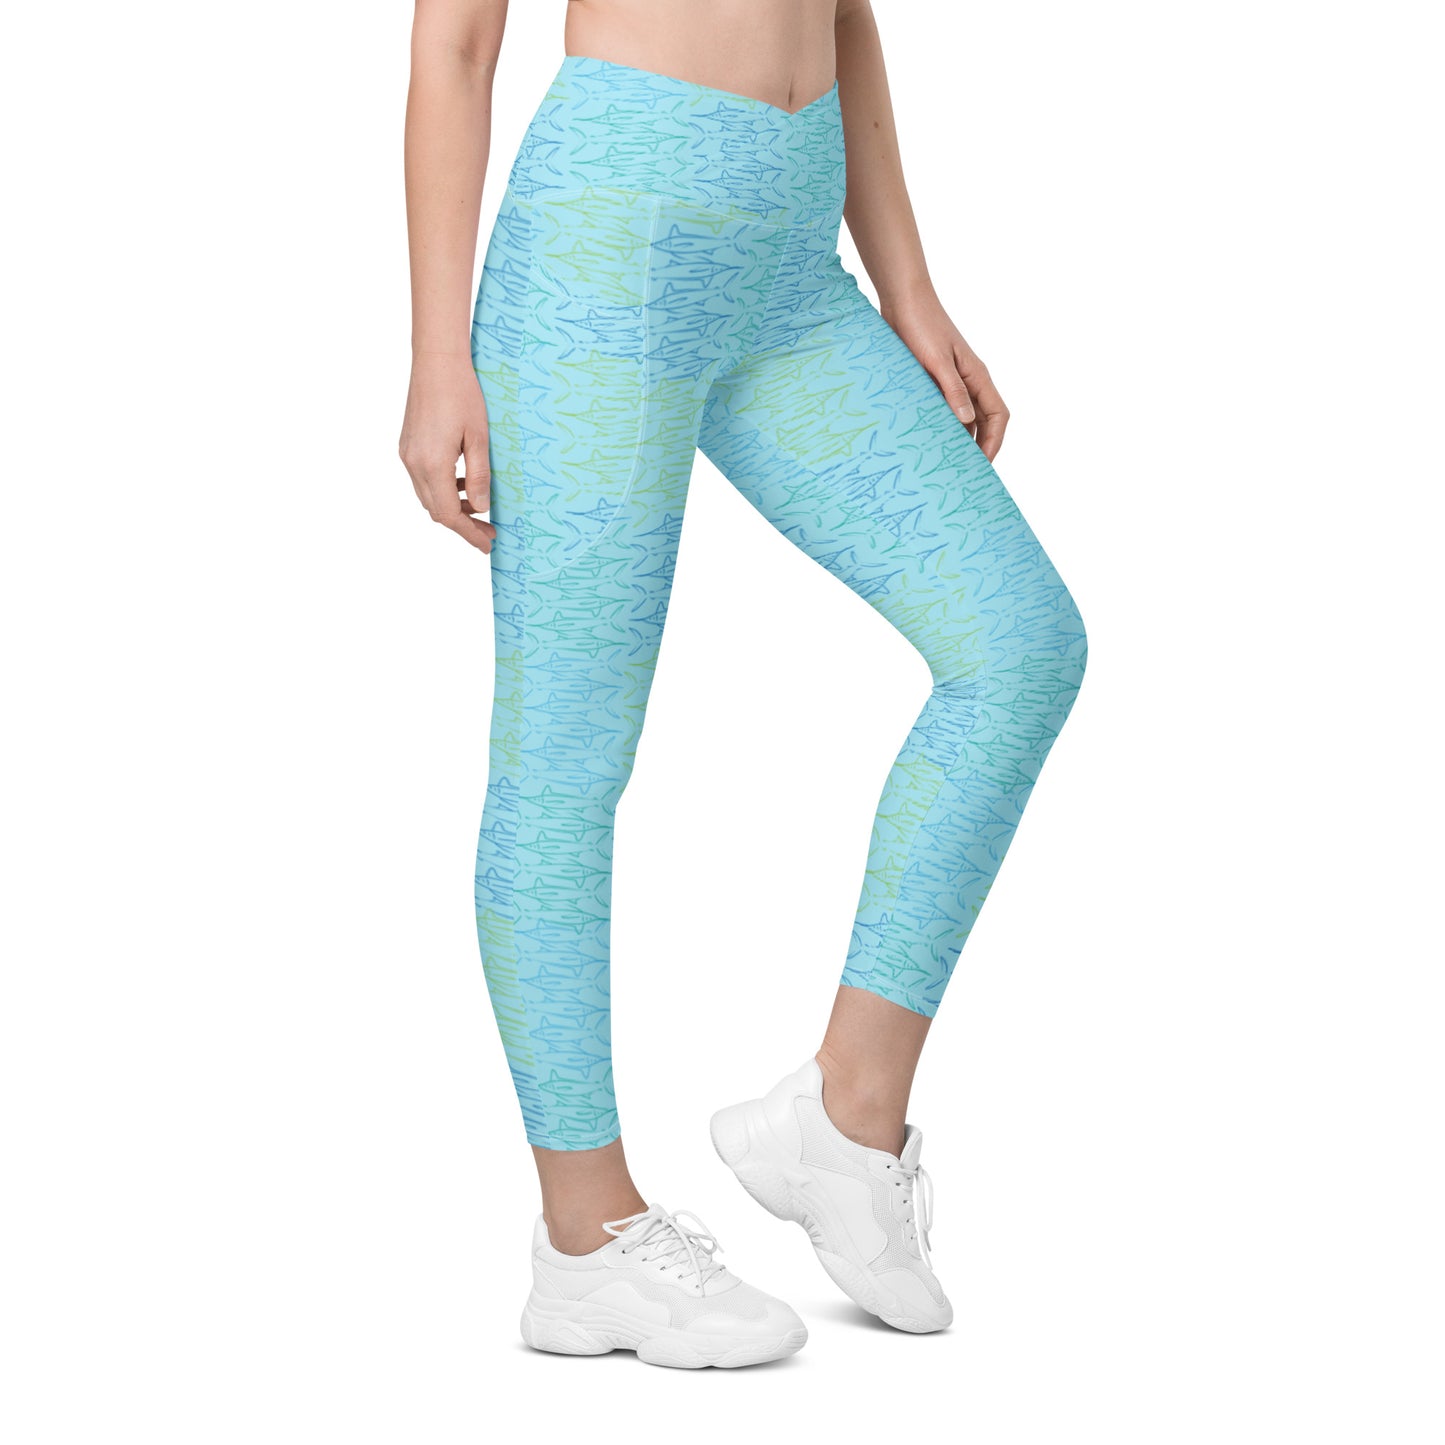 Marlin pattern Crossover leggings with pockets